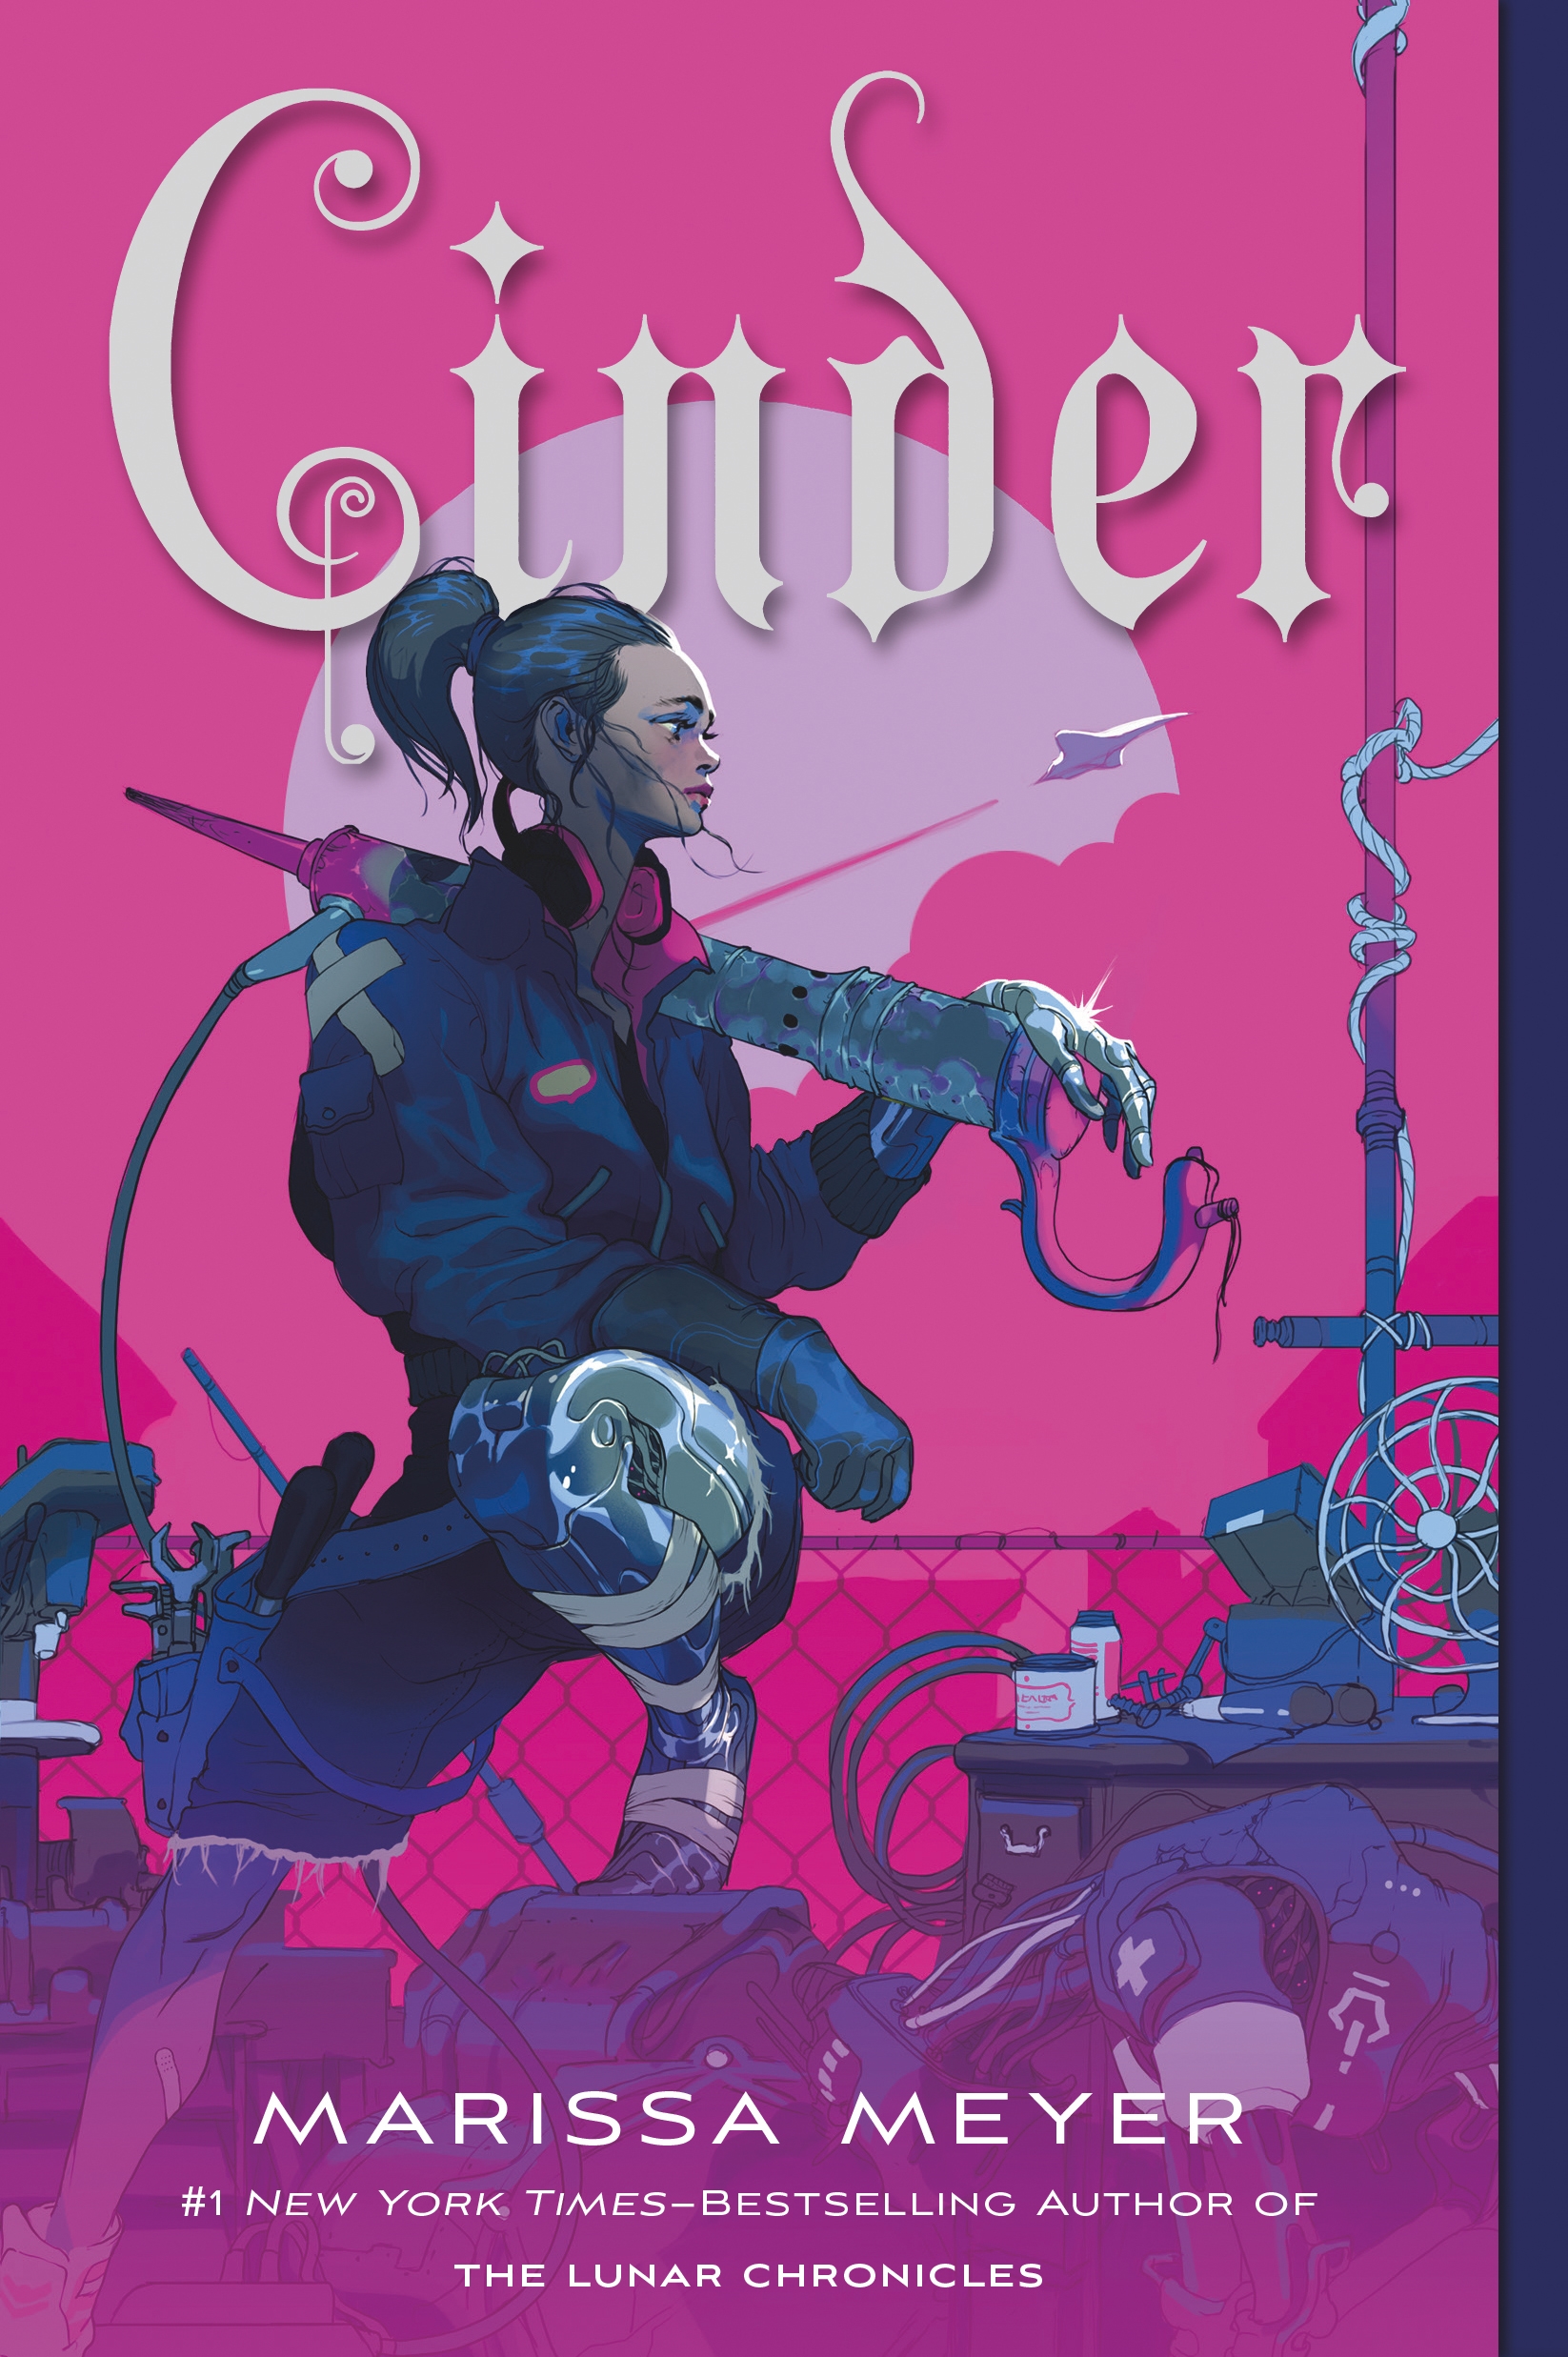 Cinder cover image